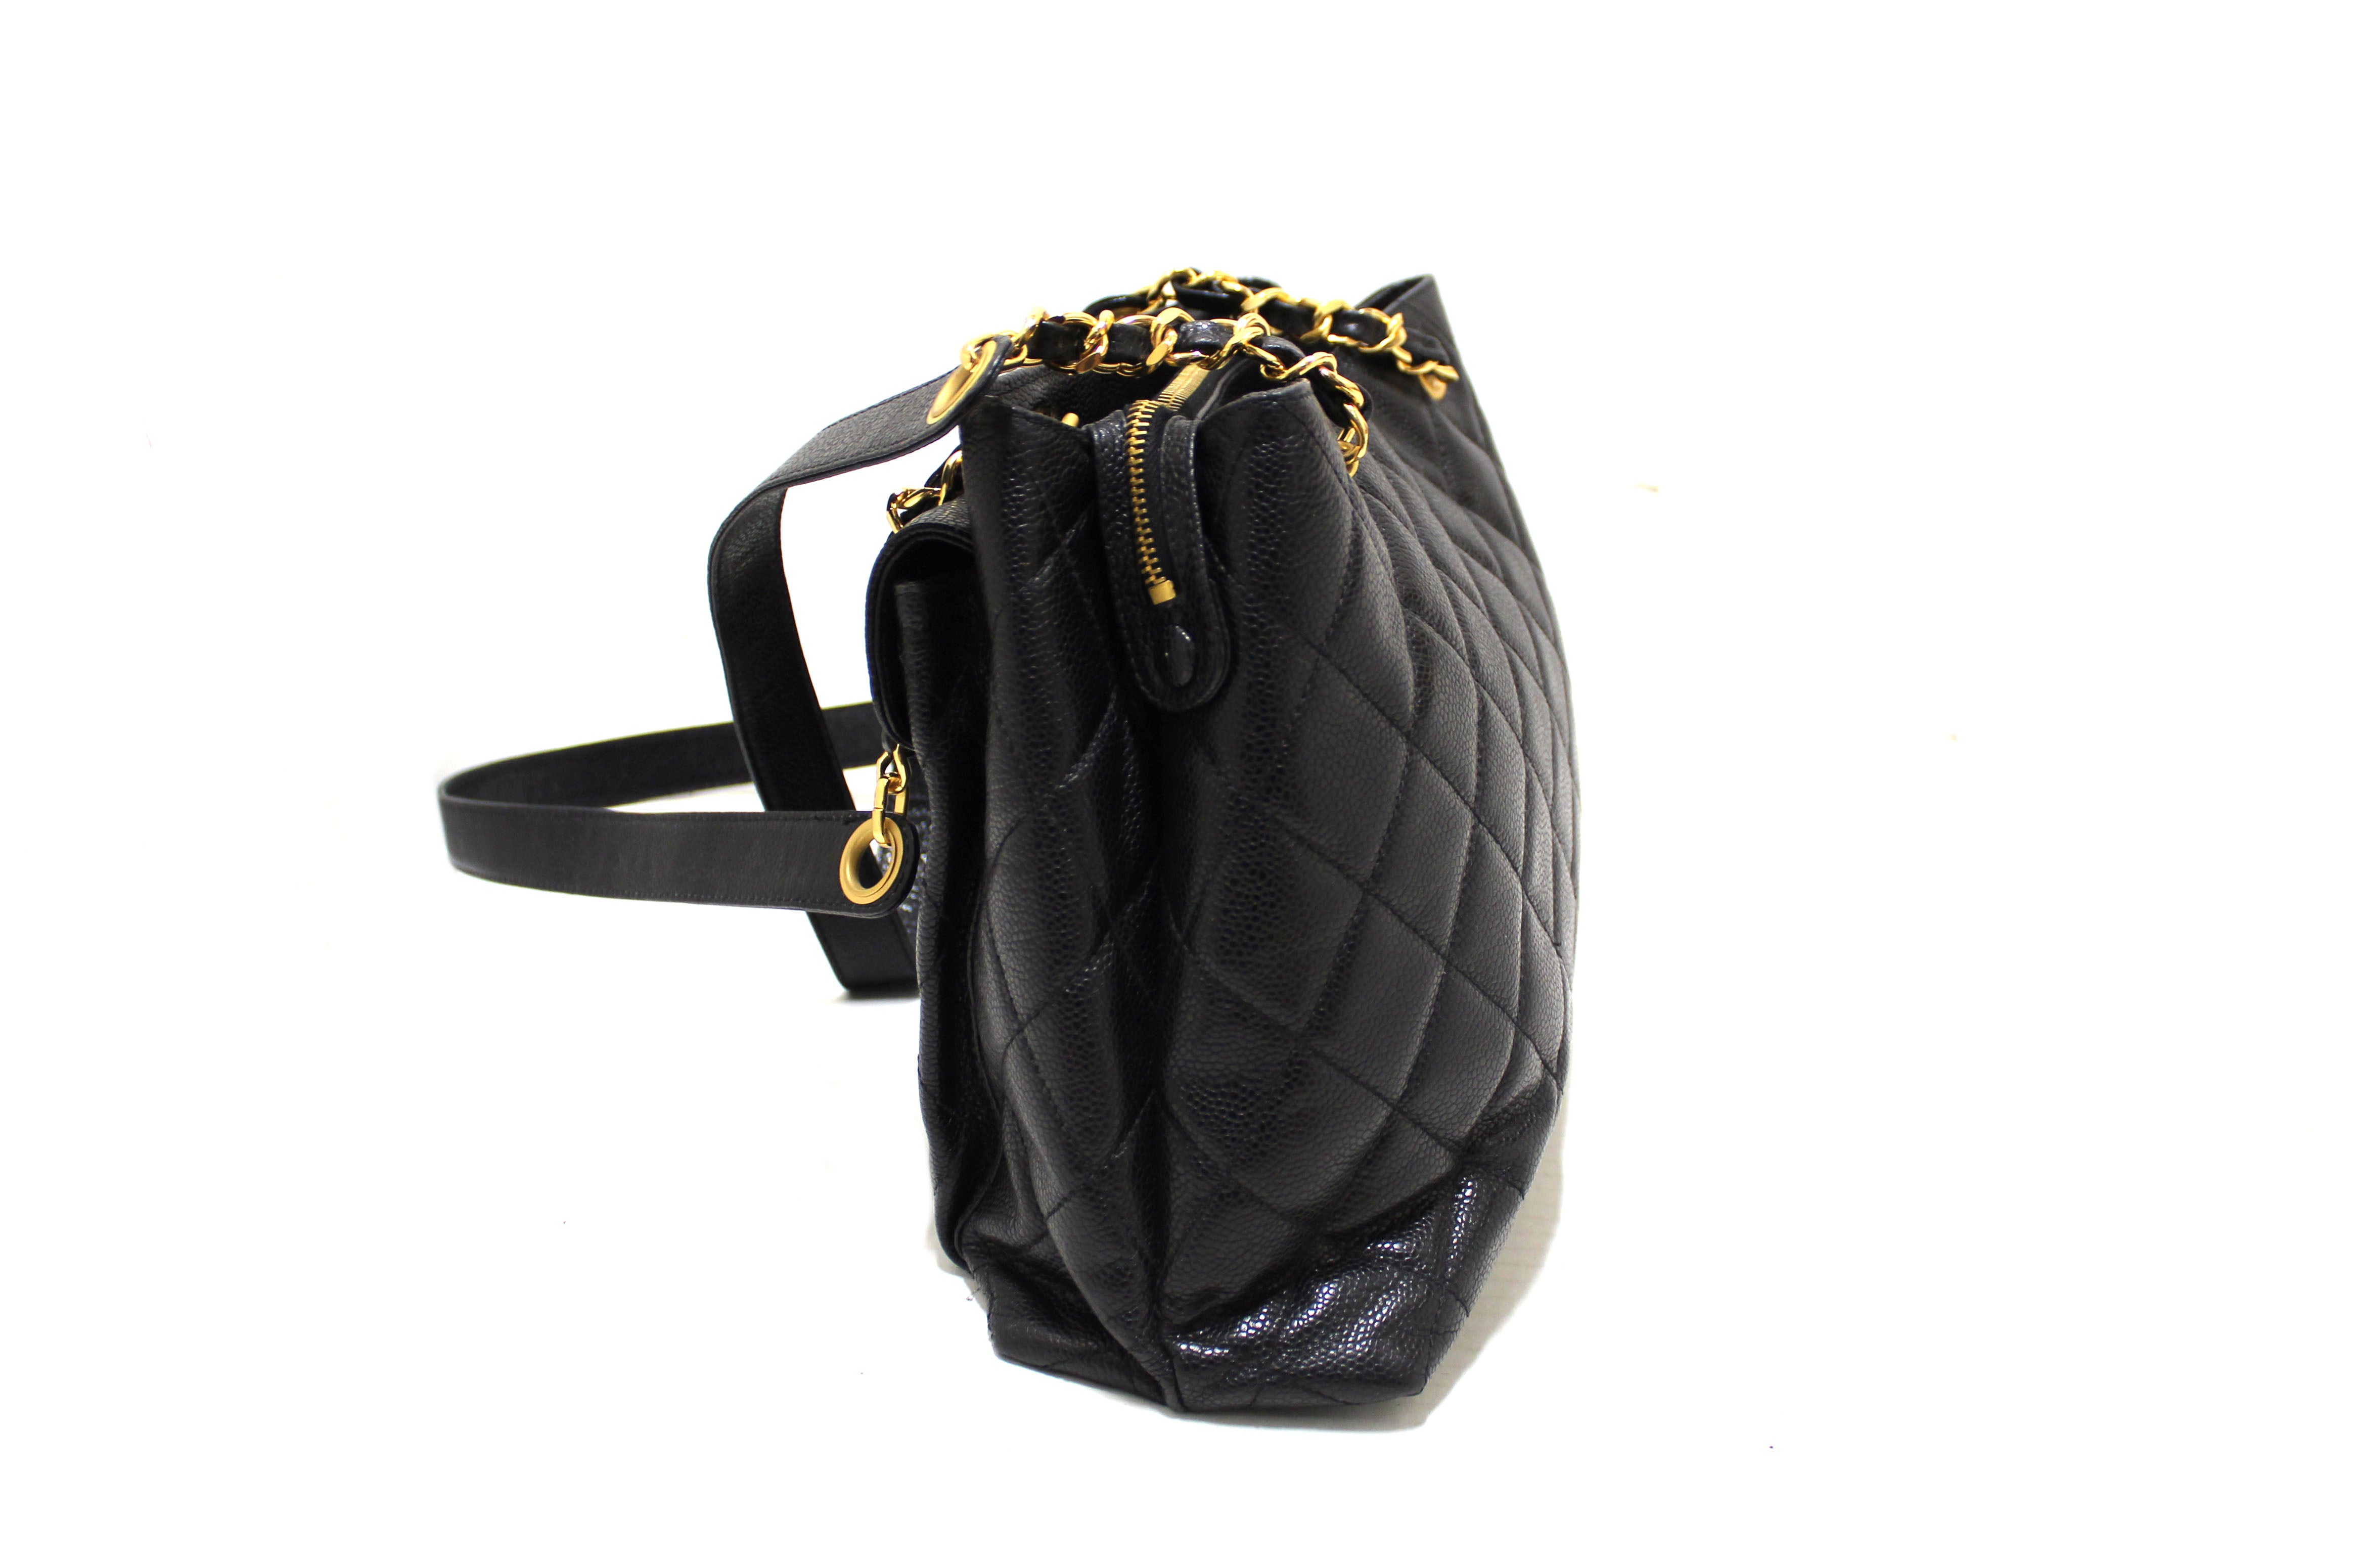 Authentic Chanel Vintage Black Quilted Caviar Shoulder Tote Bag